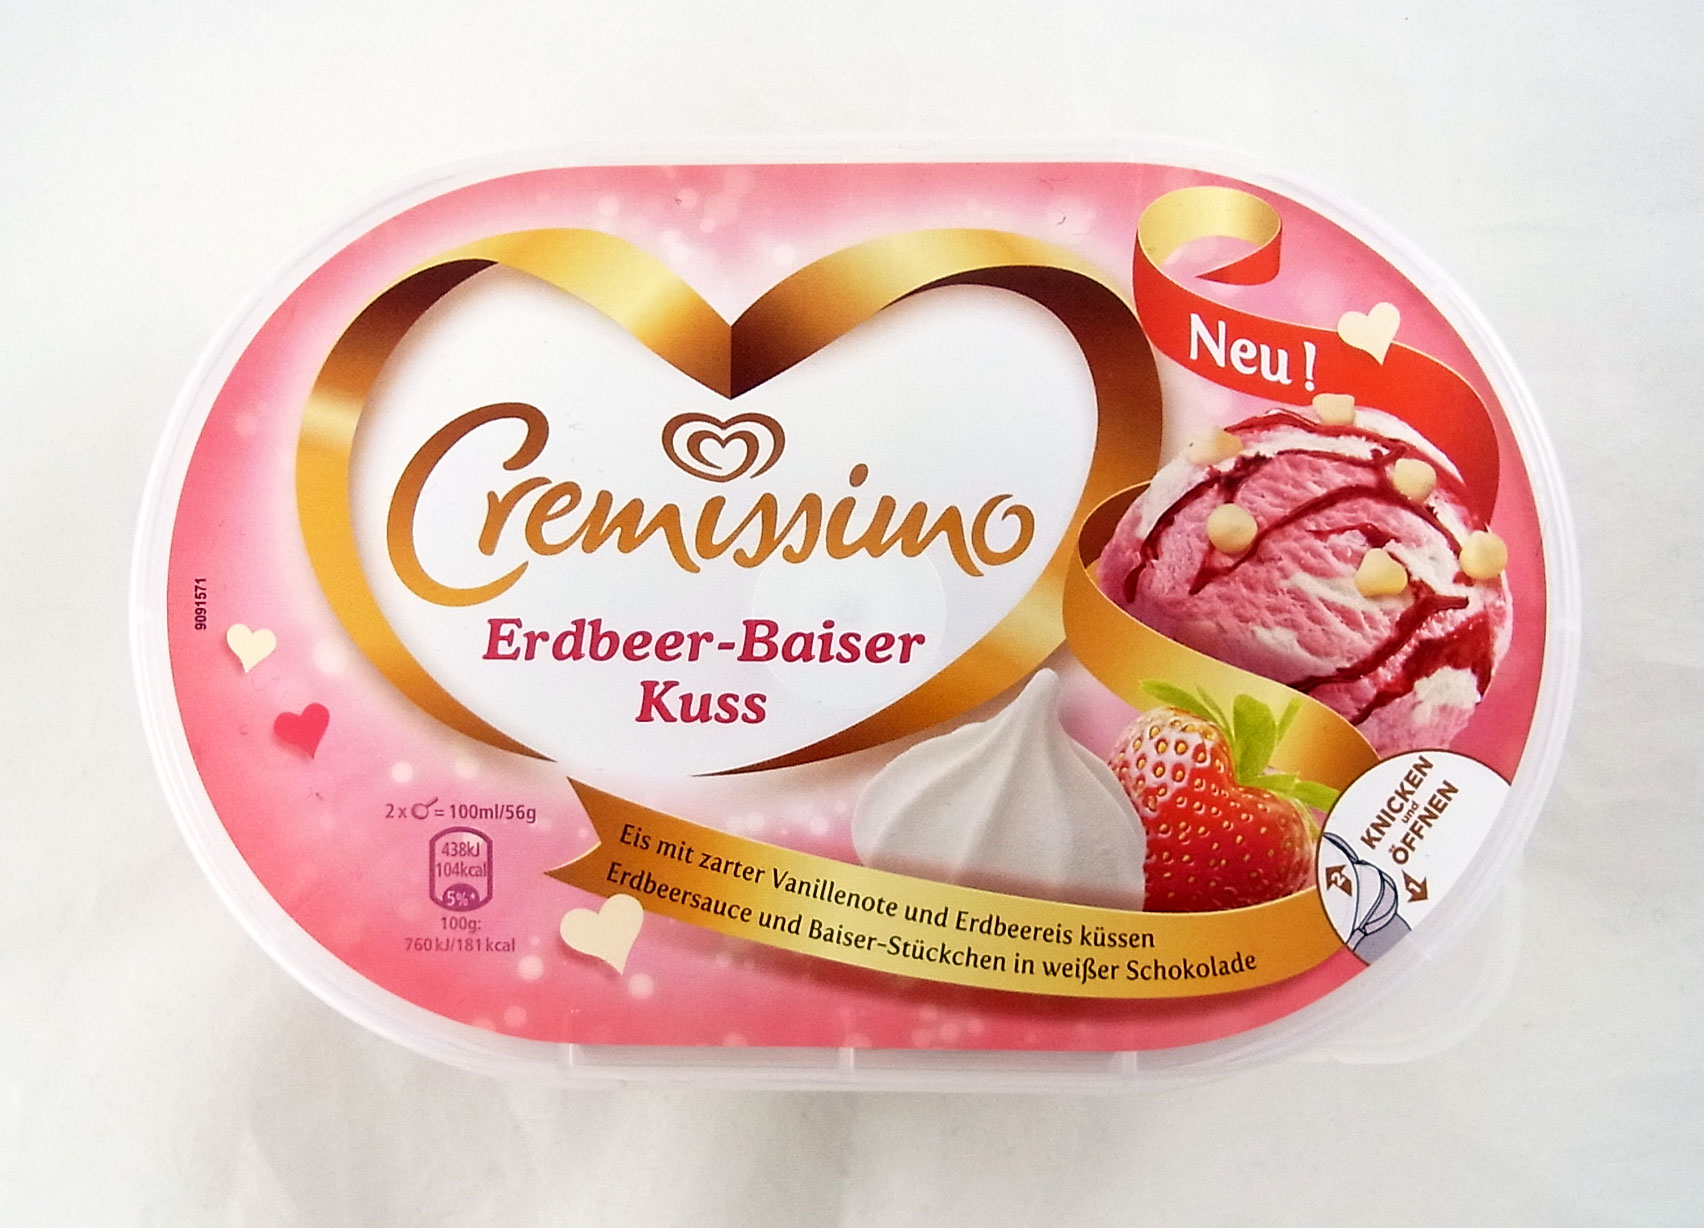 Erdbeer-Baiser Langnese Cremissimo Kuss | Lebensmittelklarheit